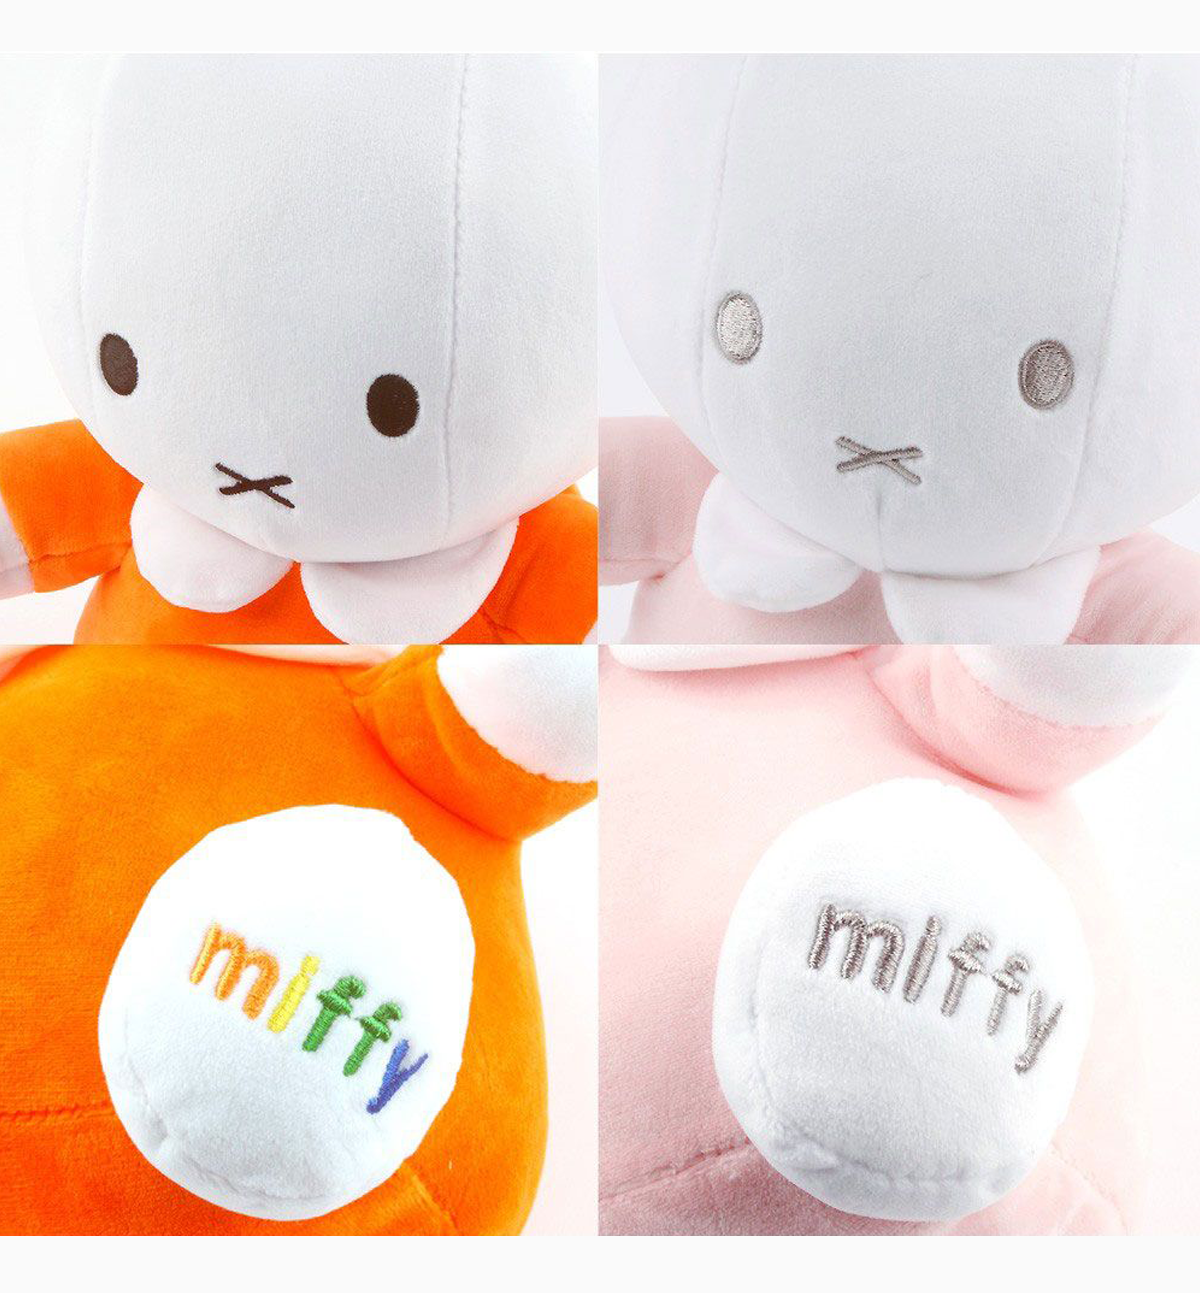 Miffy Sitting Plush [5 Colors]